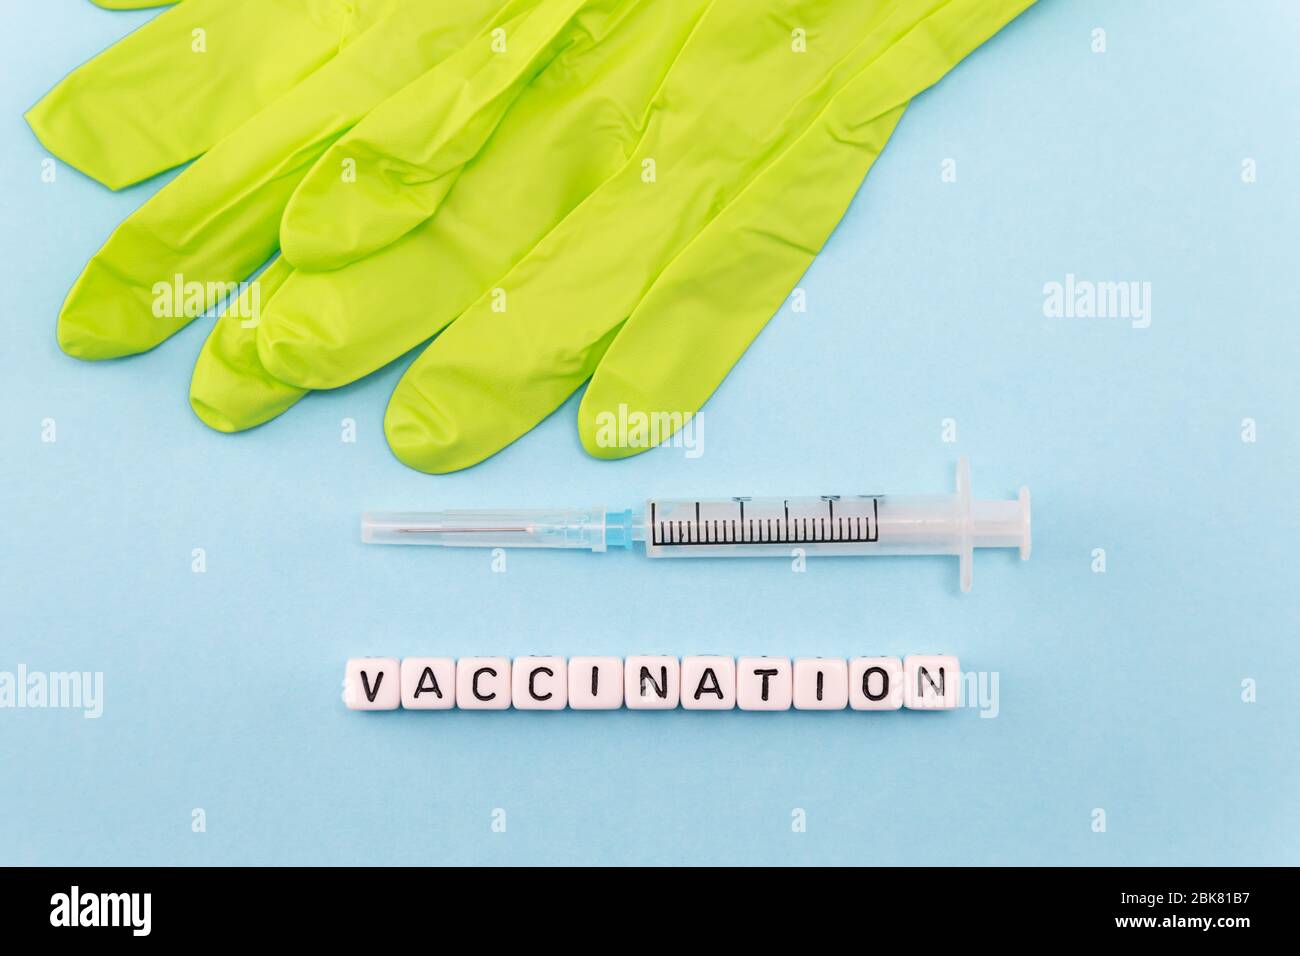 Guanti medici, siringa e la parola vaccinazione composta da cubi su sfondo blu Foto Stock